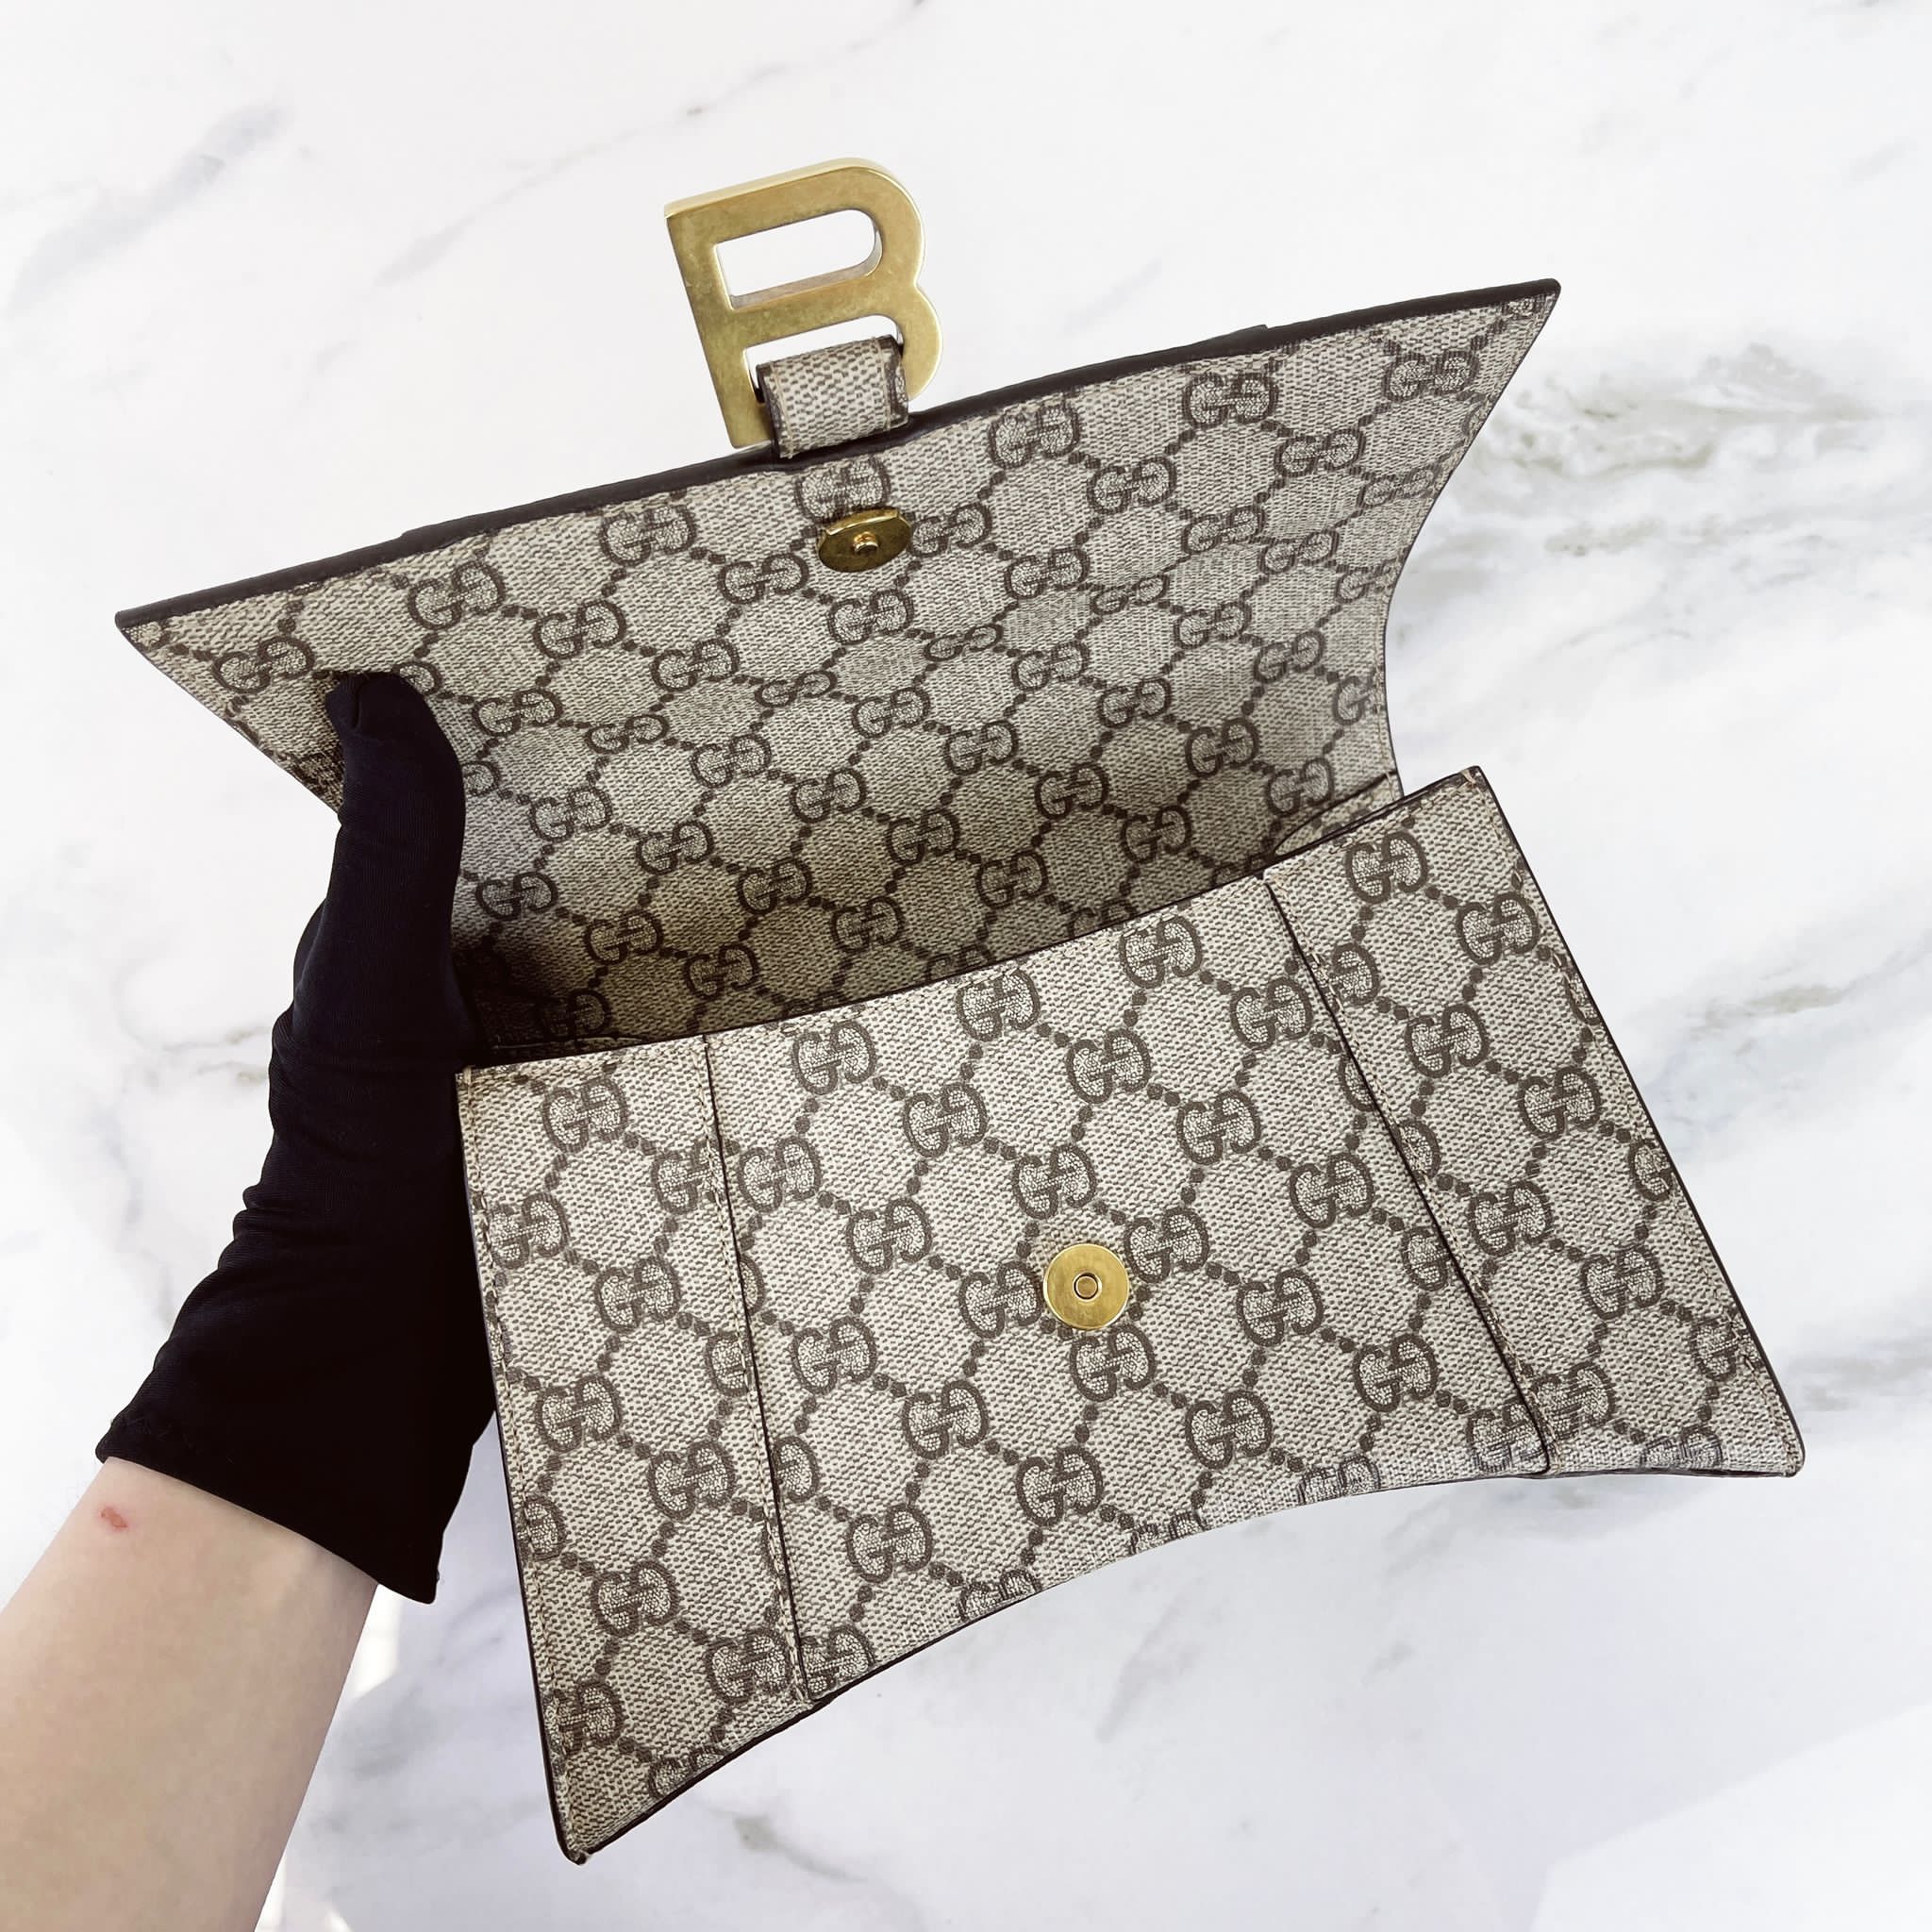 Gucci X Balenciaga Hacker Project Hourglass Bag